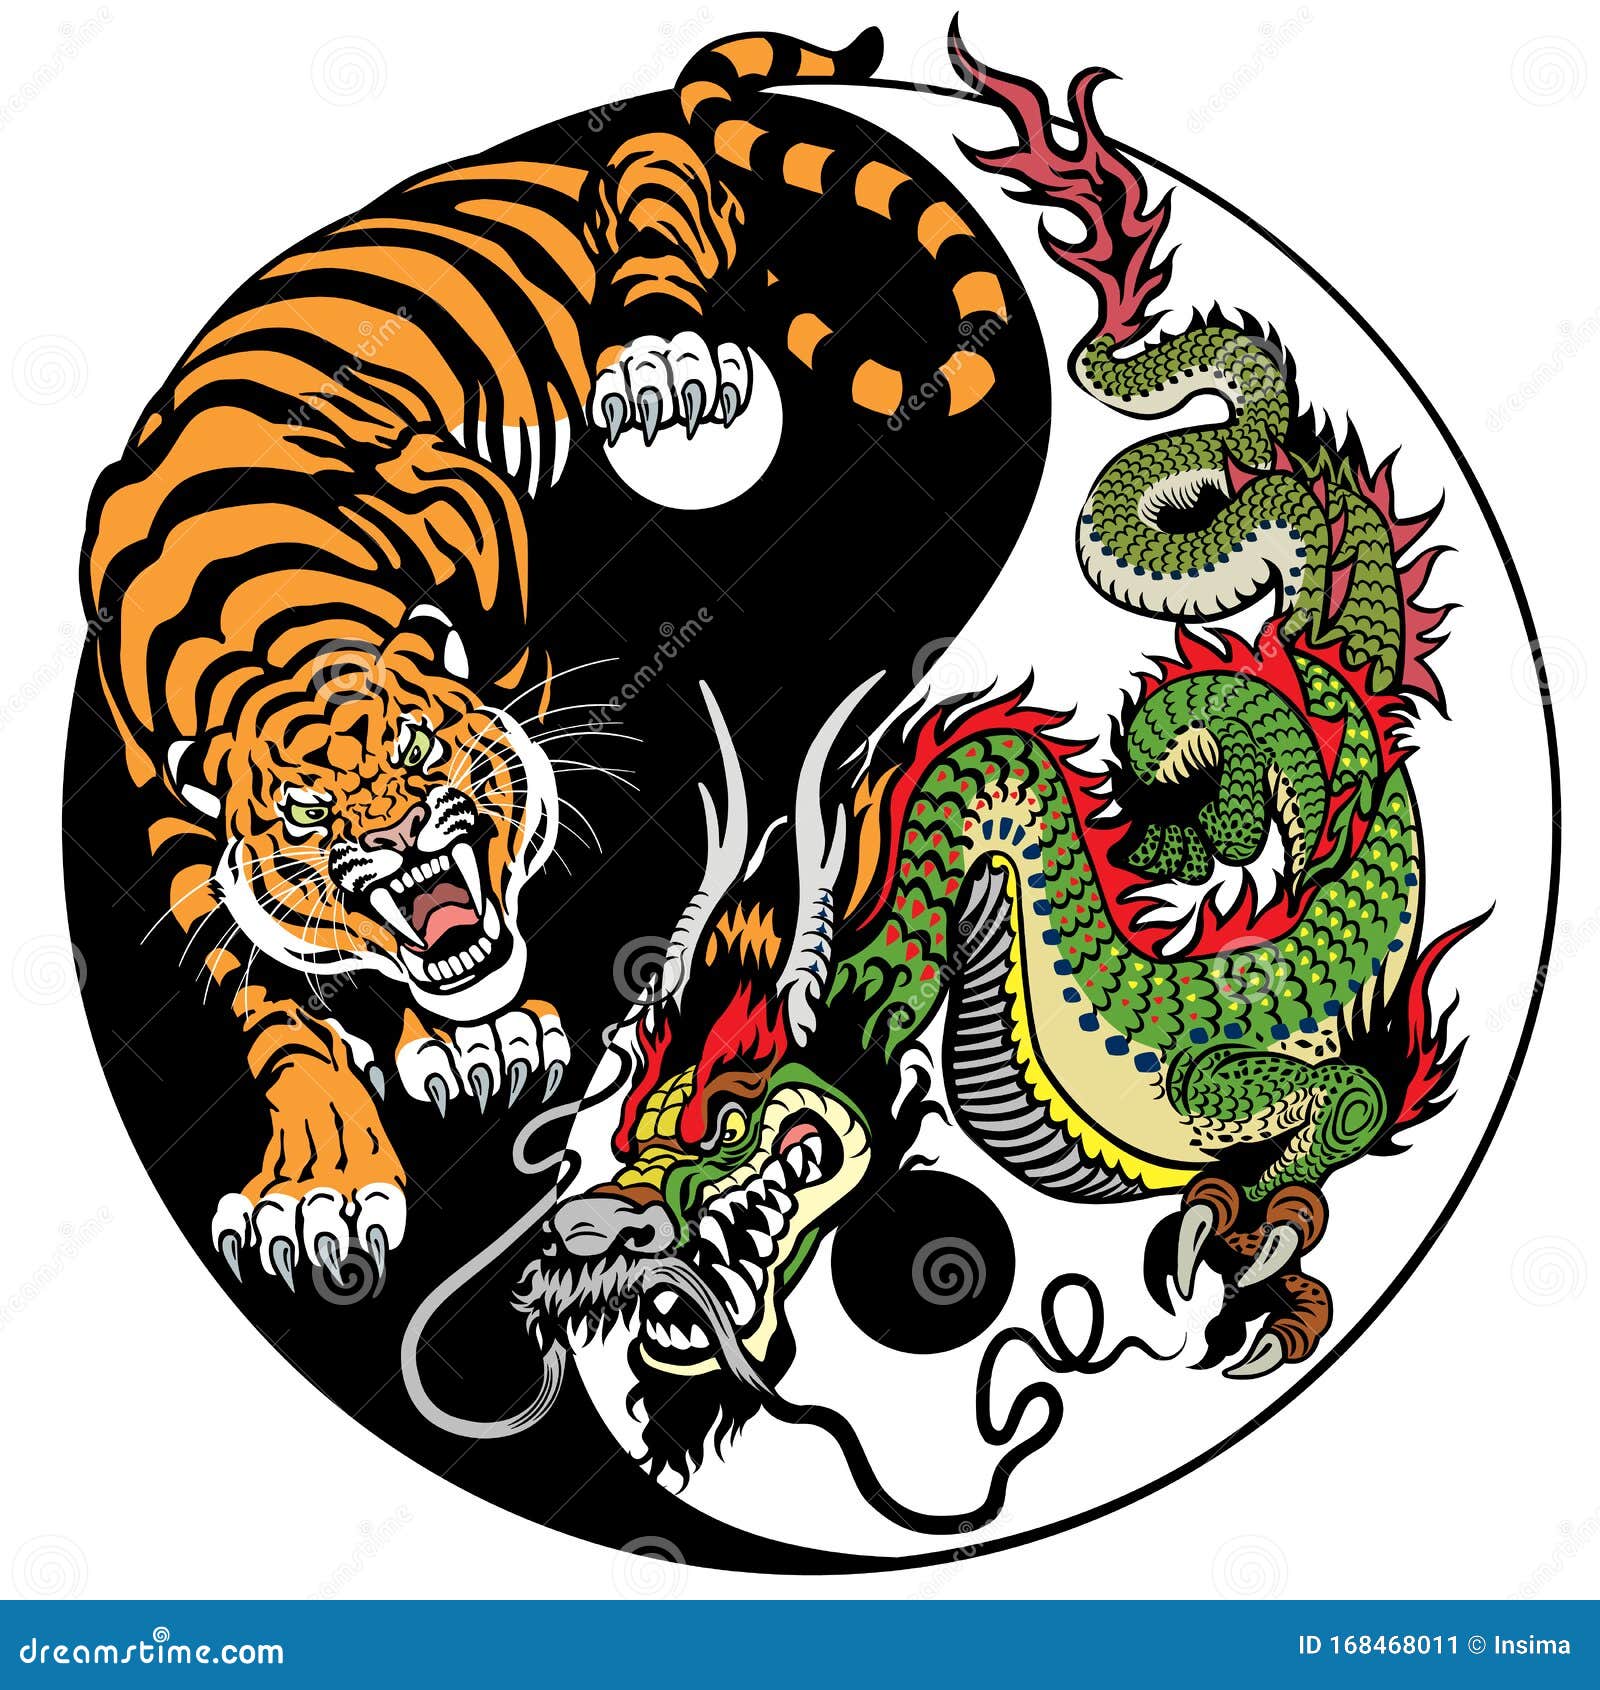 ALAZA Chinese Yin and Yang Tiger Dragon Area Rug for Living Room Bedroom 6'x4' 